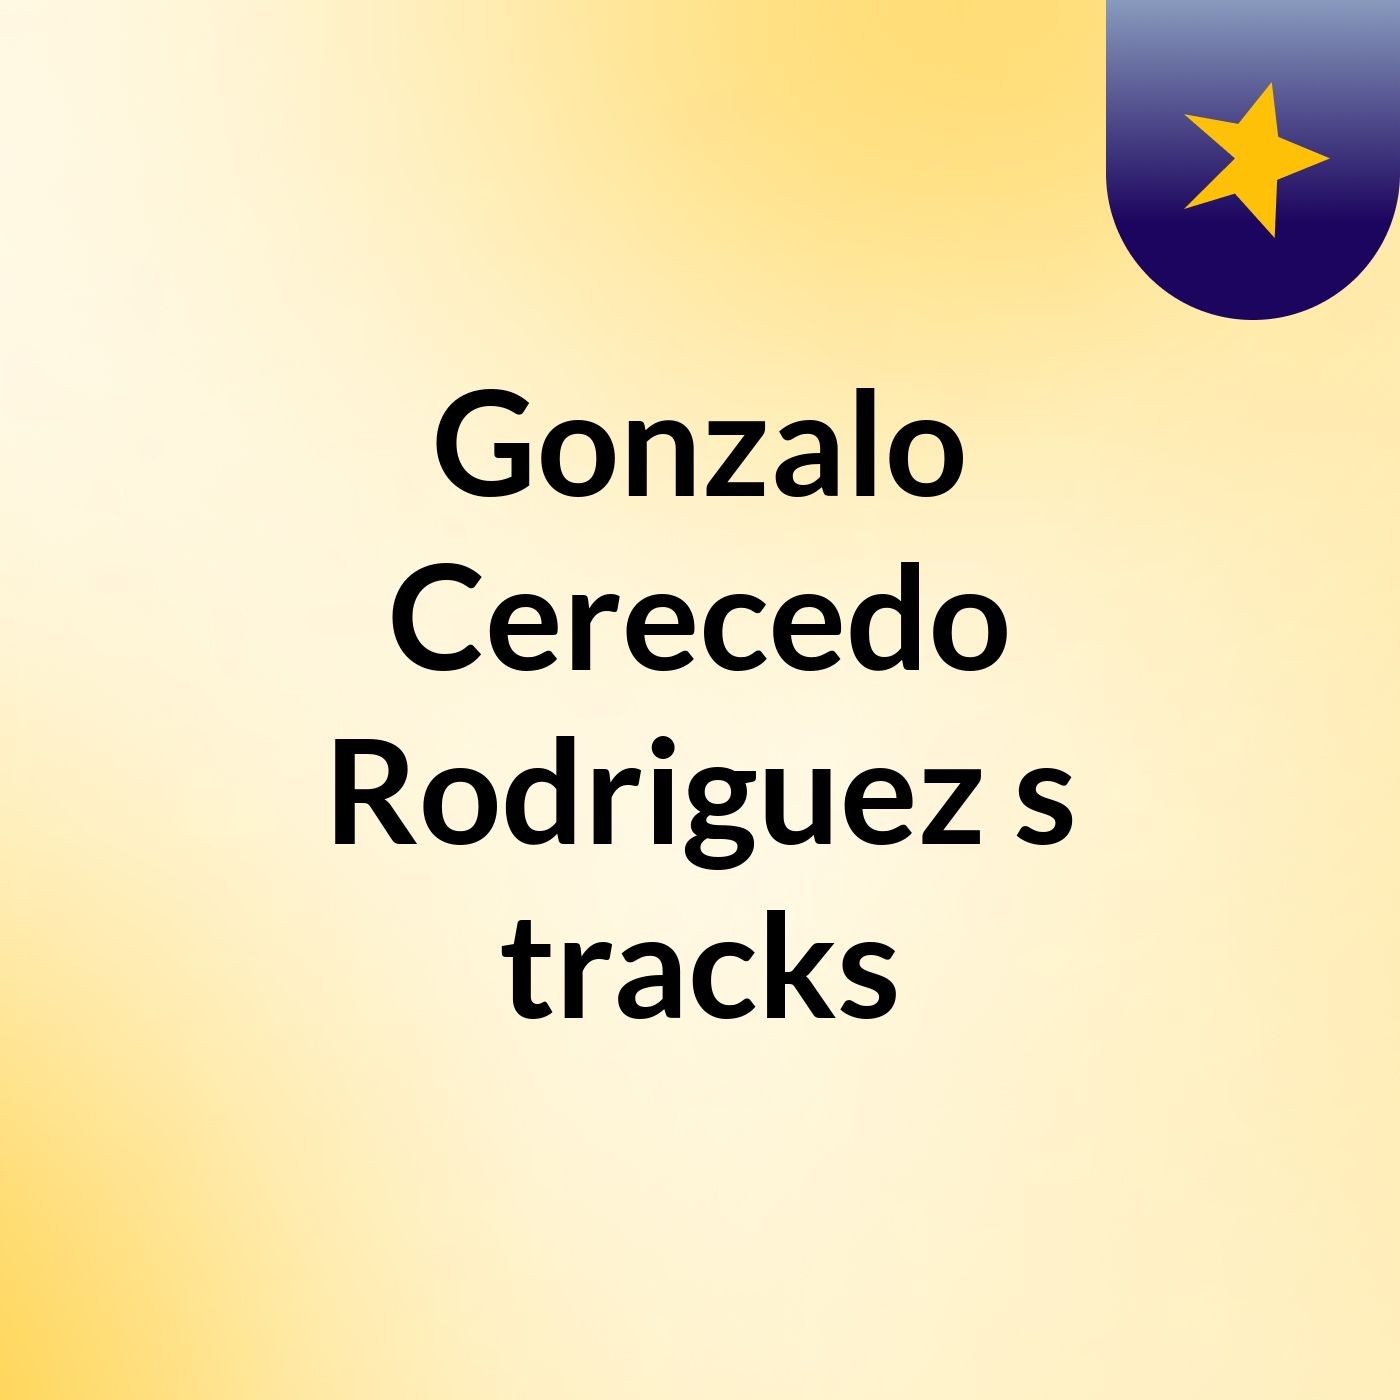 Gonzalo Cerecedo Rodriguez's tracks